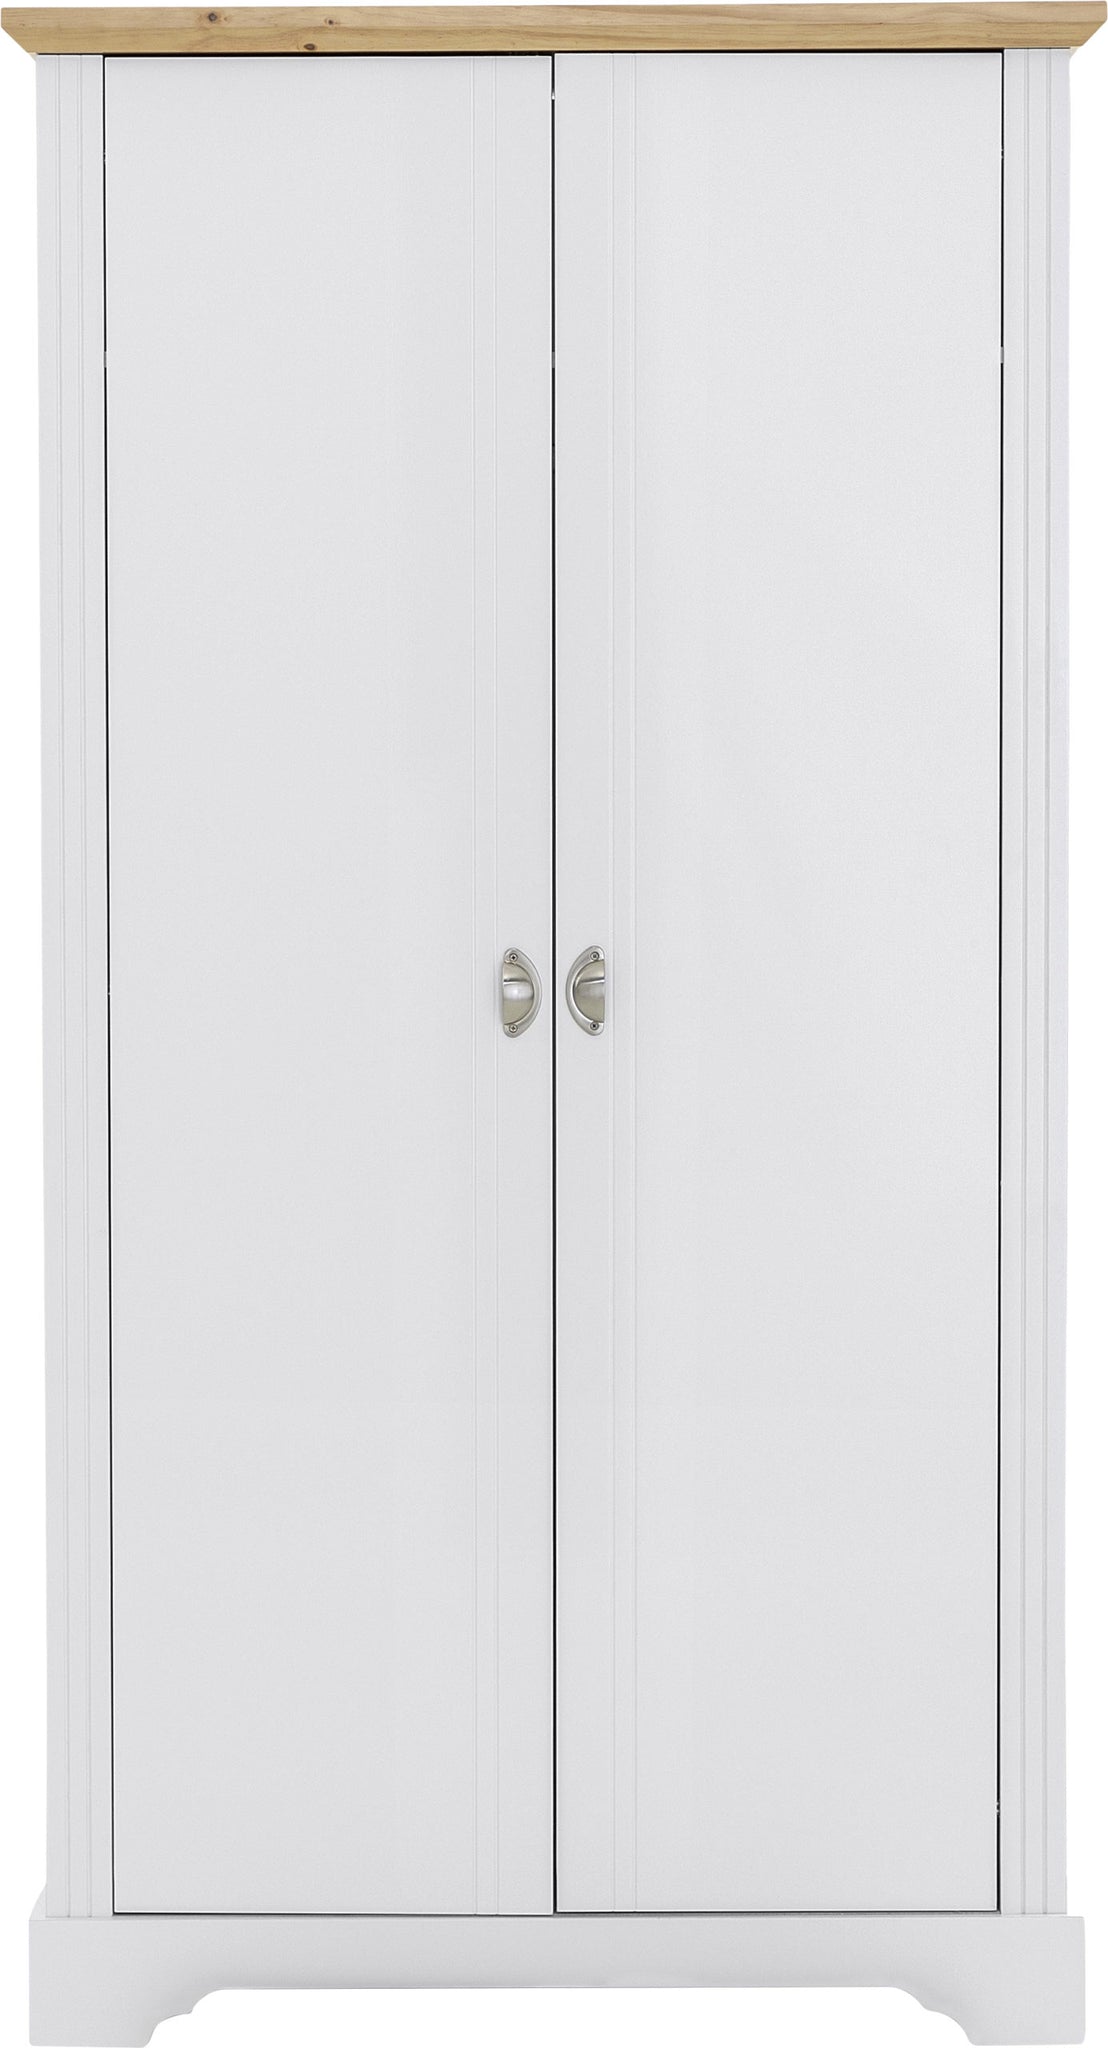 TOLEDO-2-DOOR-WARDROBE-WHITEOAK-EFFECT-100-101-124-07-scaled.jpg